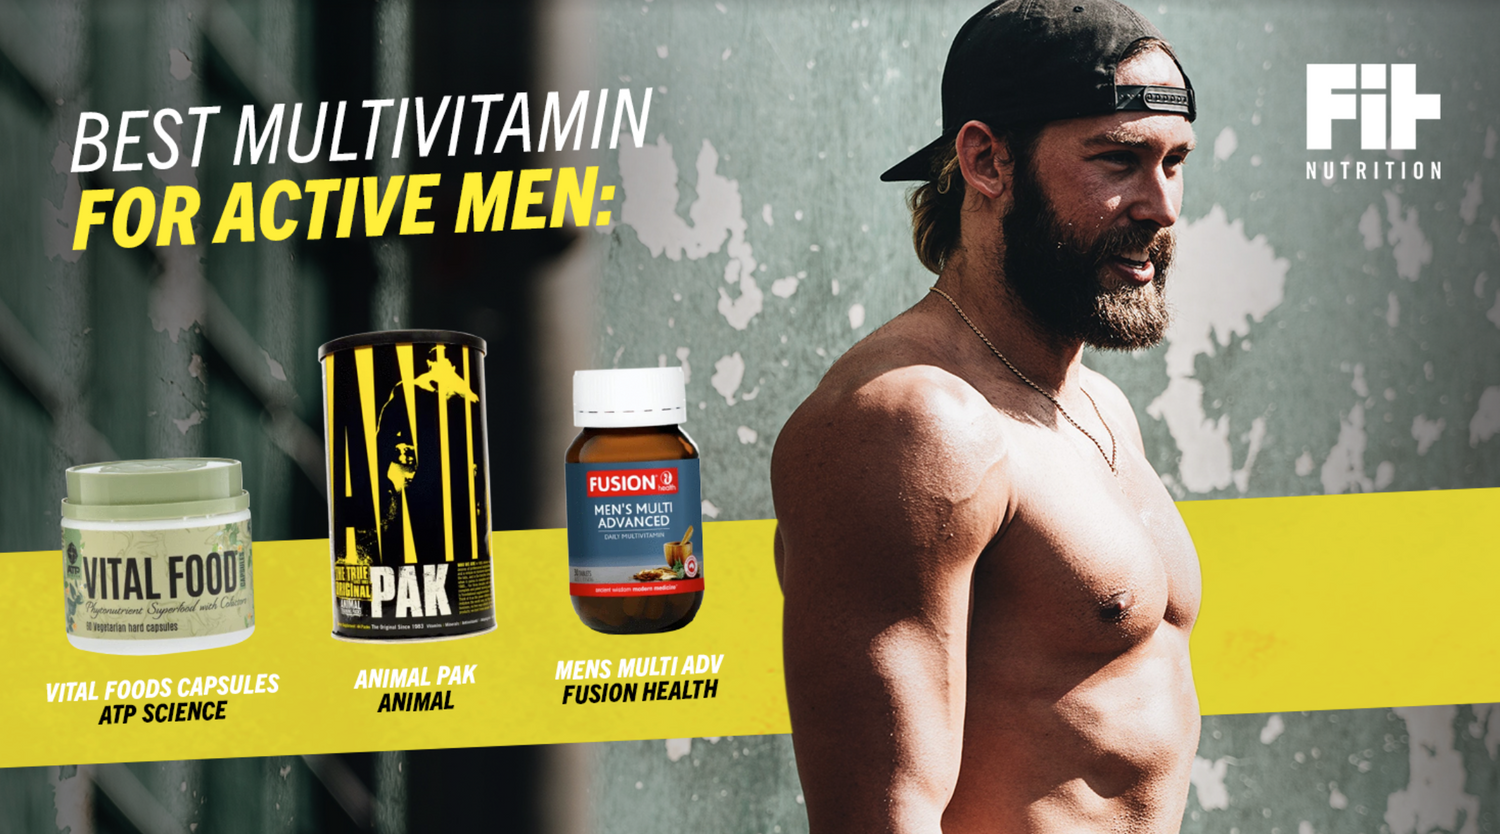 Best multivitamin for active men